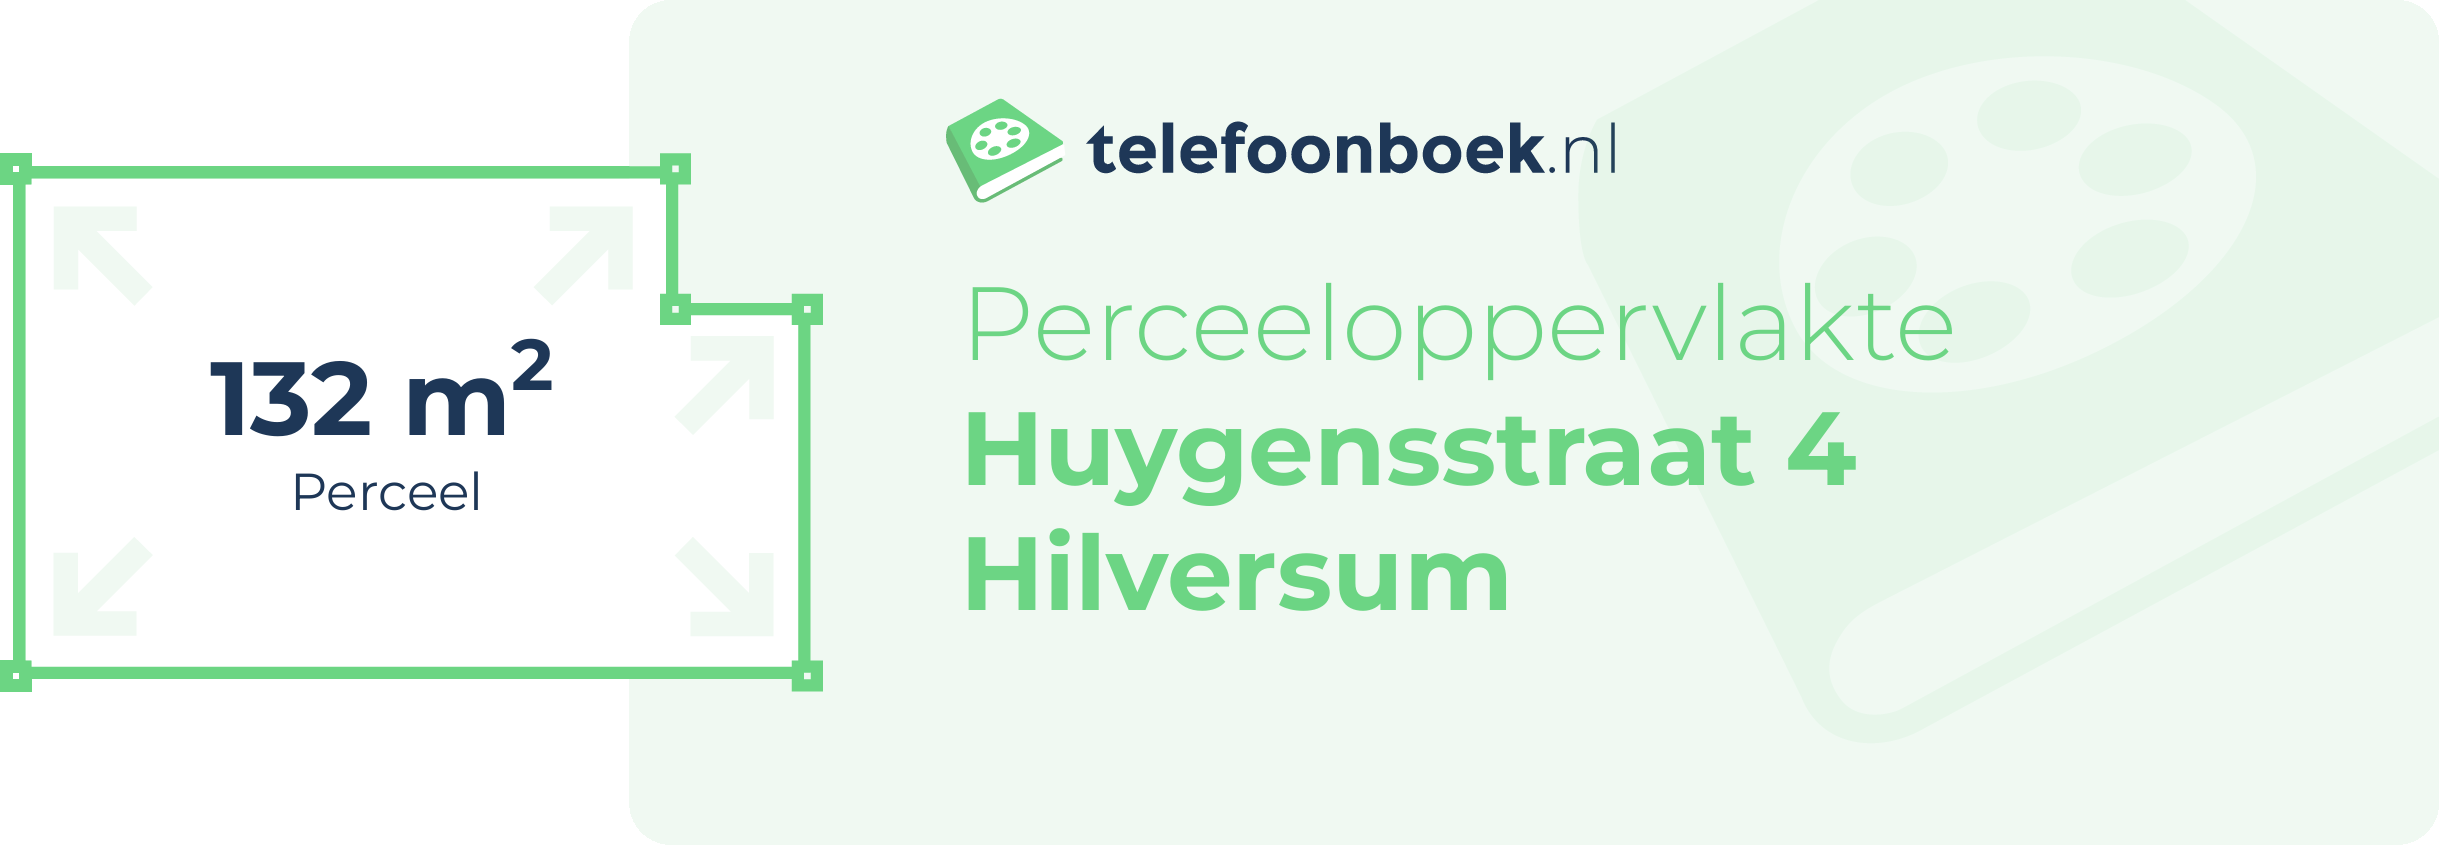 Perceeloppervlakte Huygensstraat 4 Hilversum